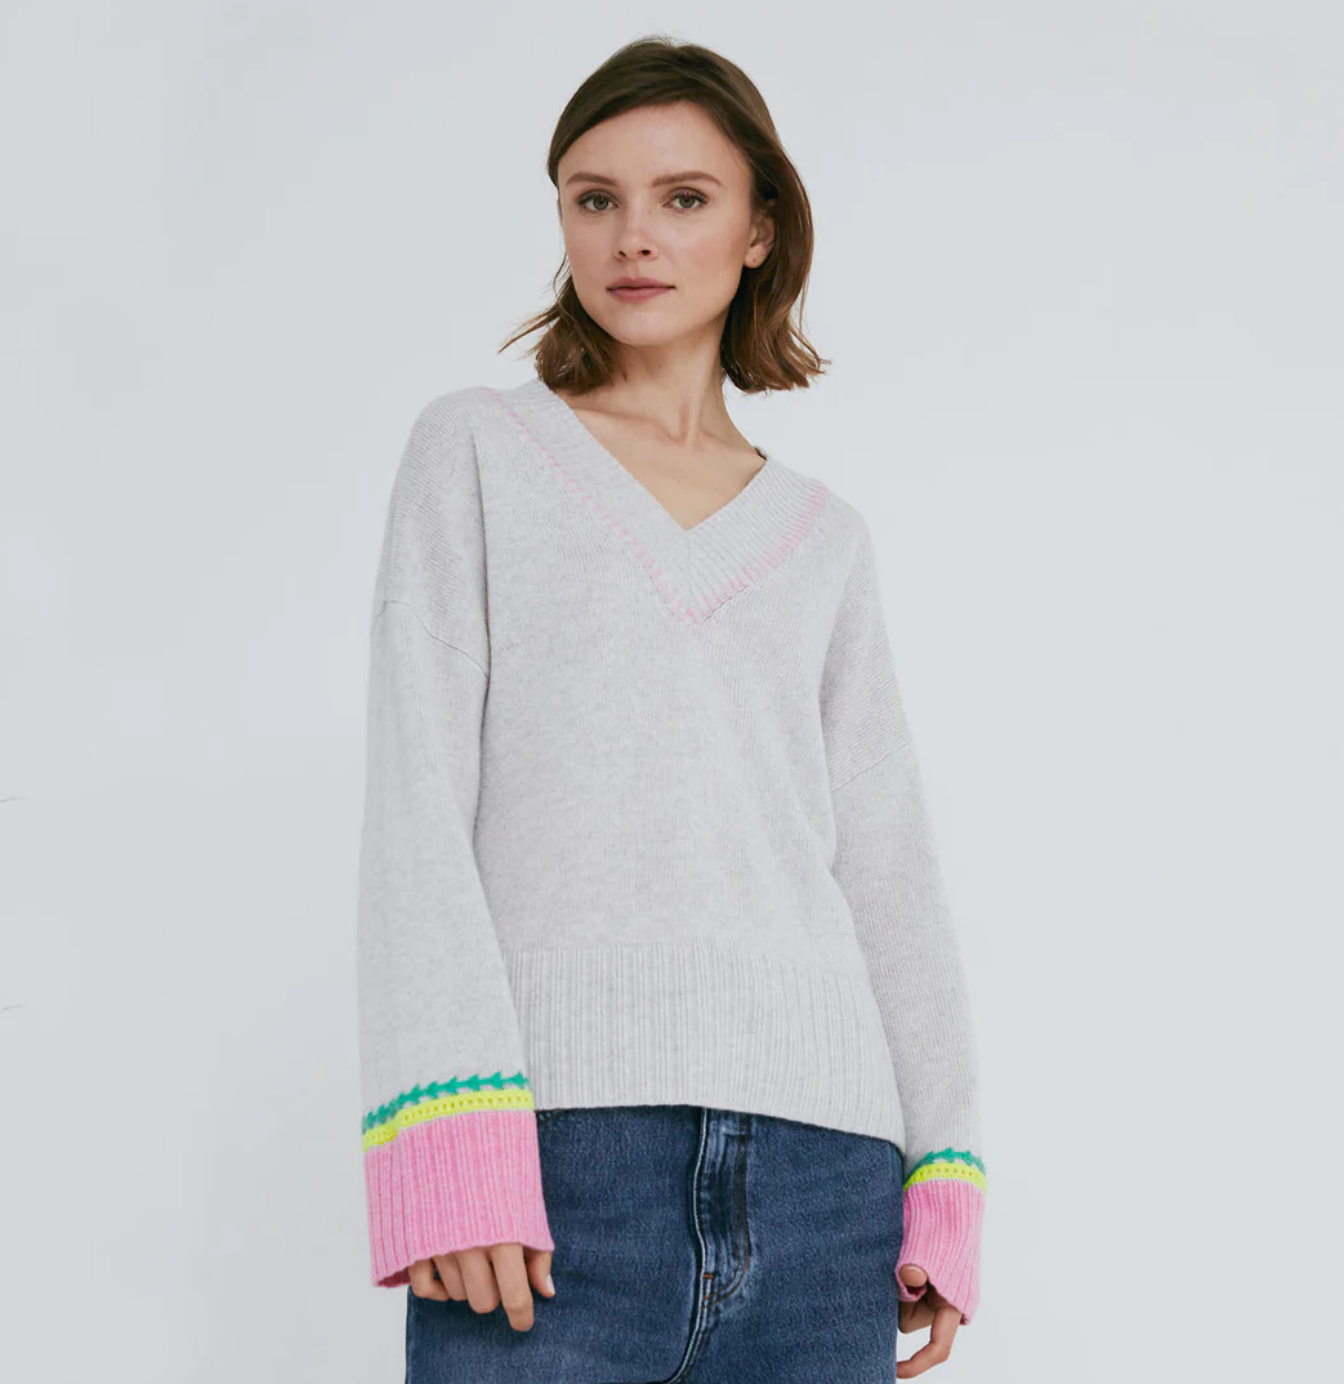 Oversized V Sweater With Crochet